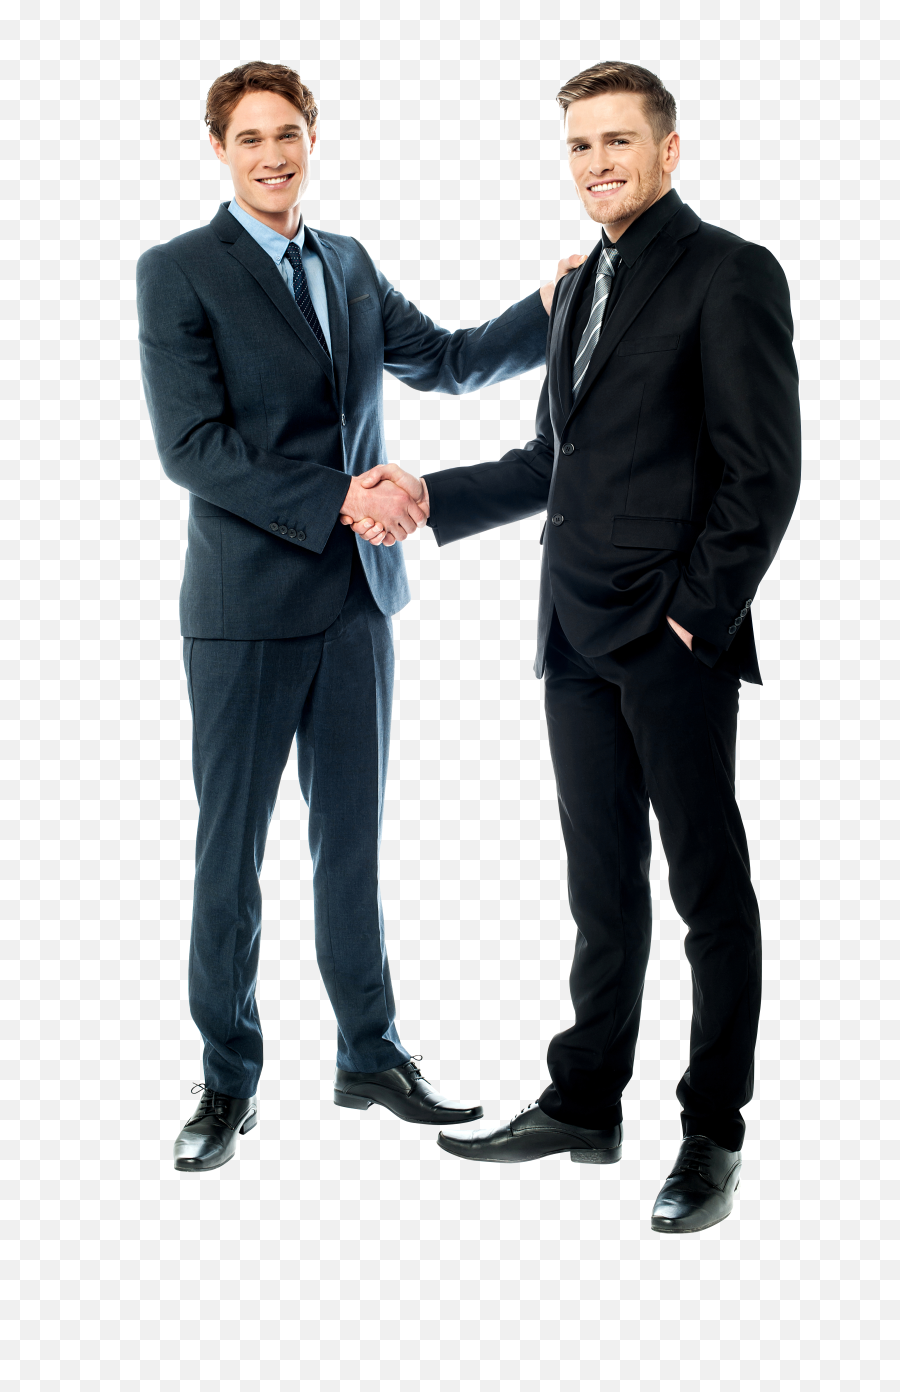 Business Handshake Png Image - Business People Shaking Hands Png,Handshake Png